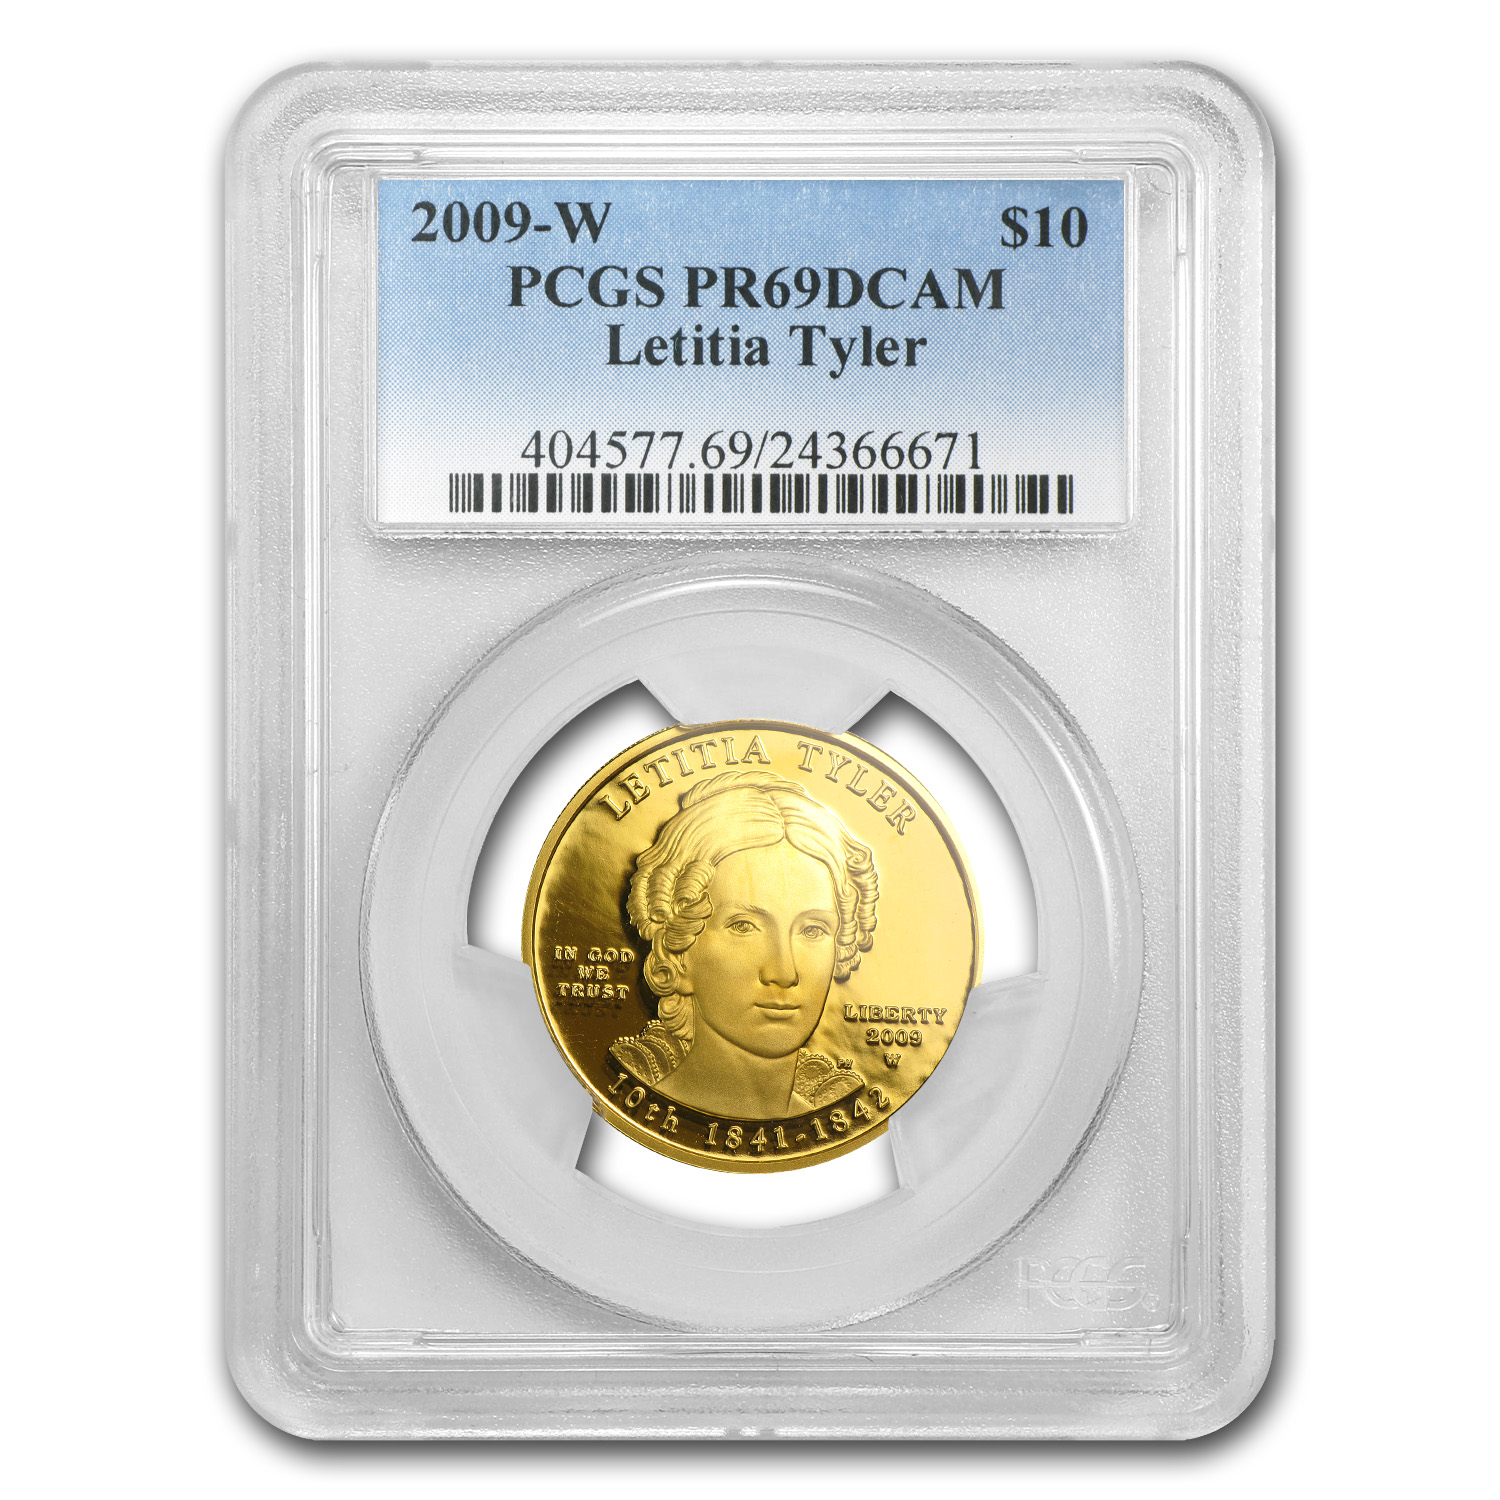 Buy 2009-W 1/2 oz Proof Gold Letitia Tyler PR-69 PCGS